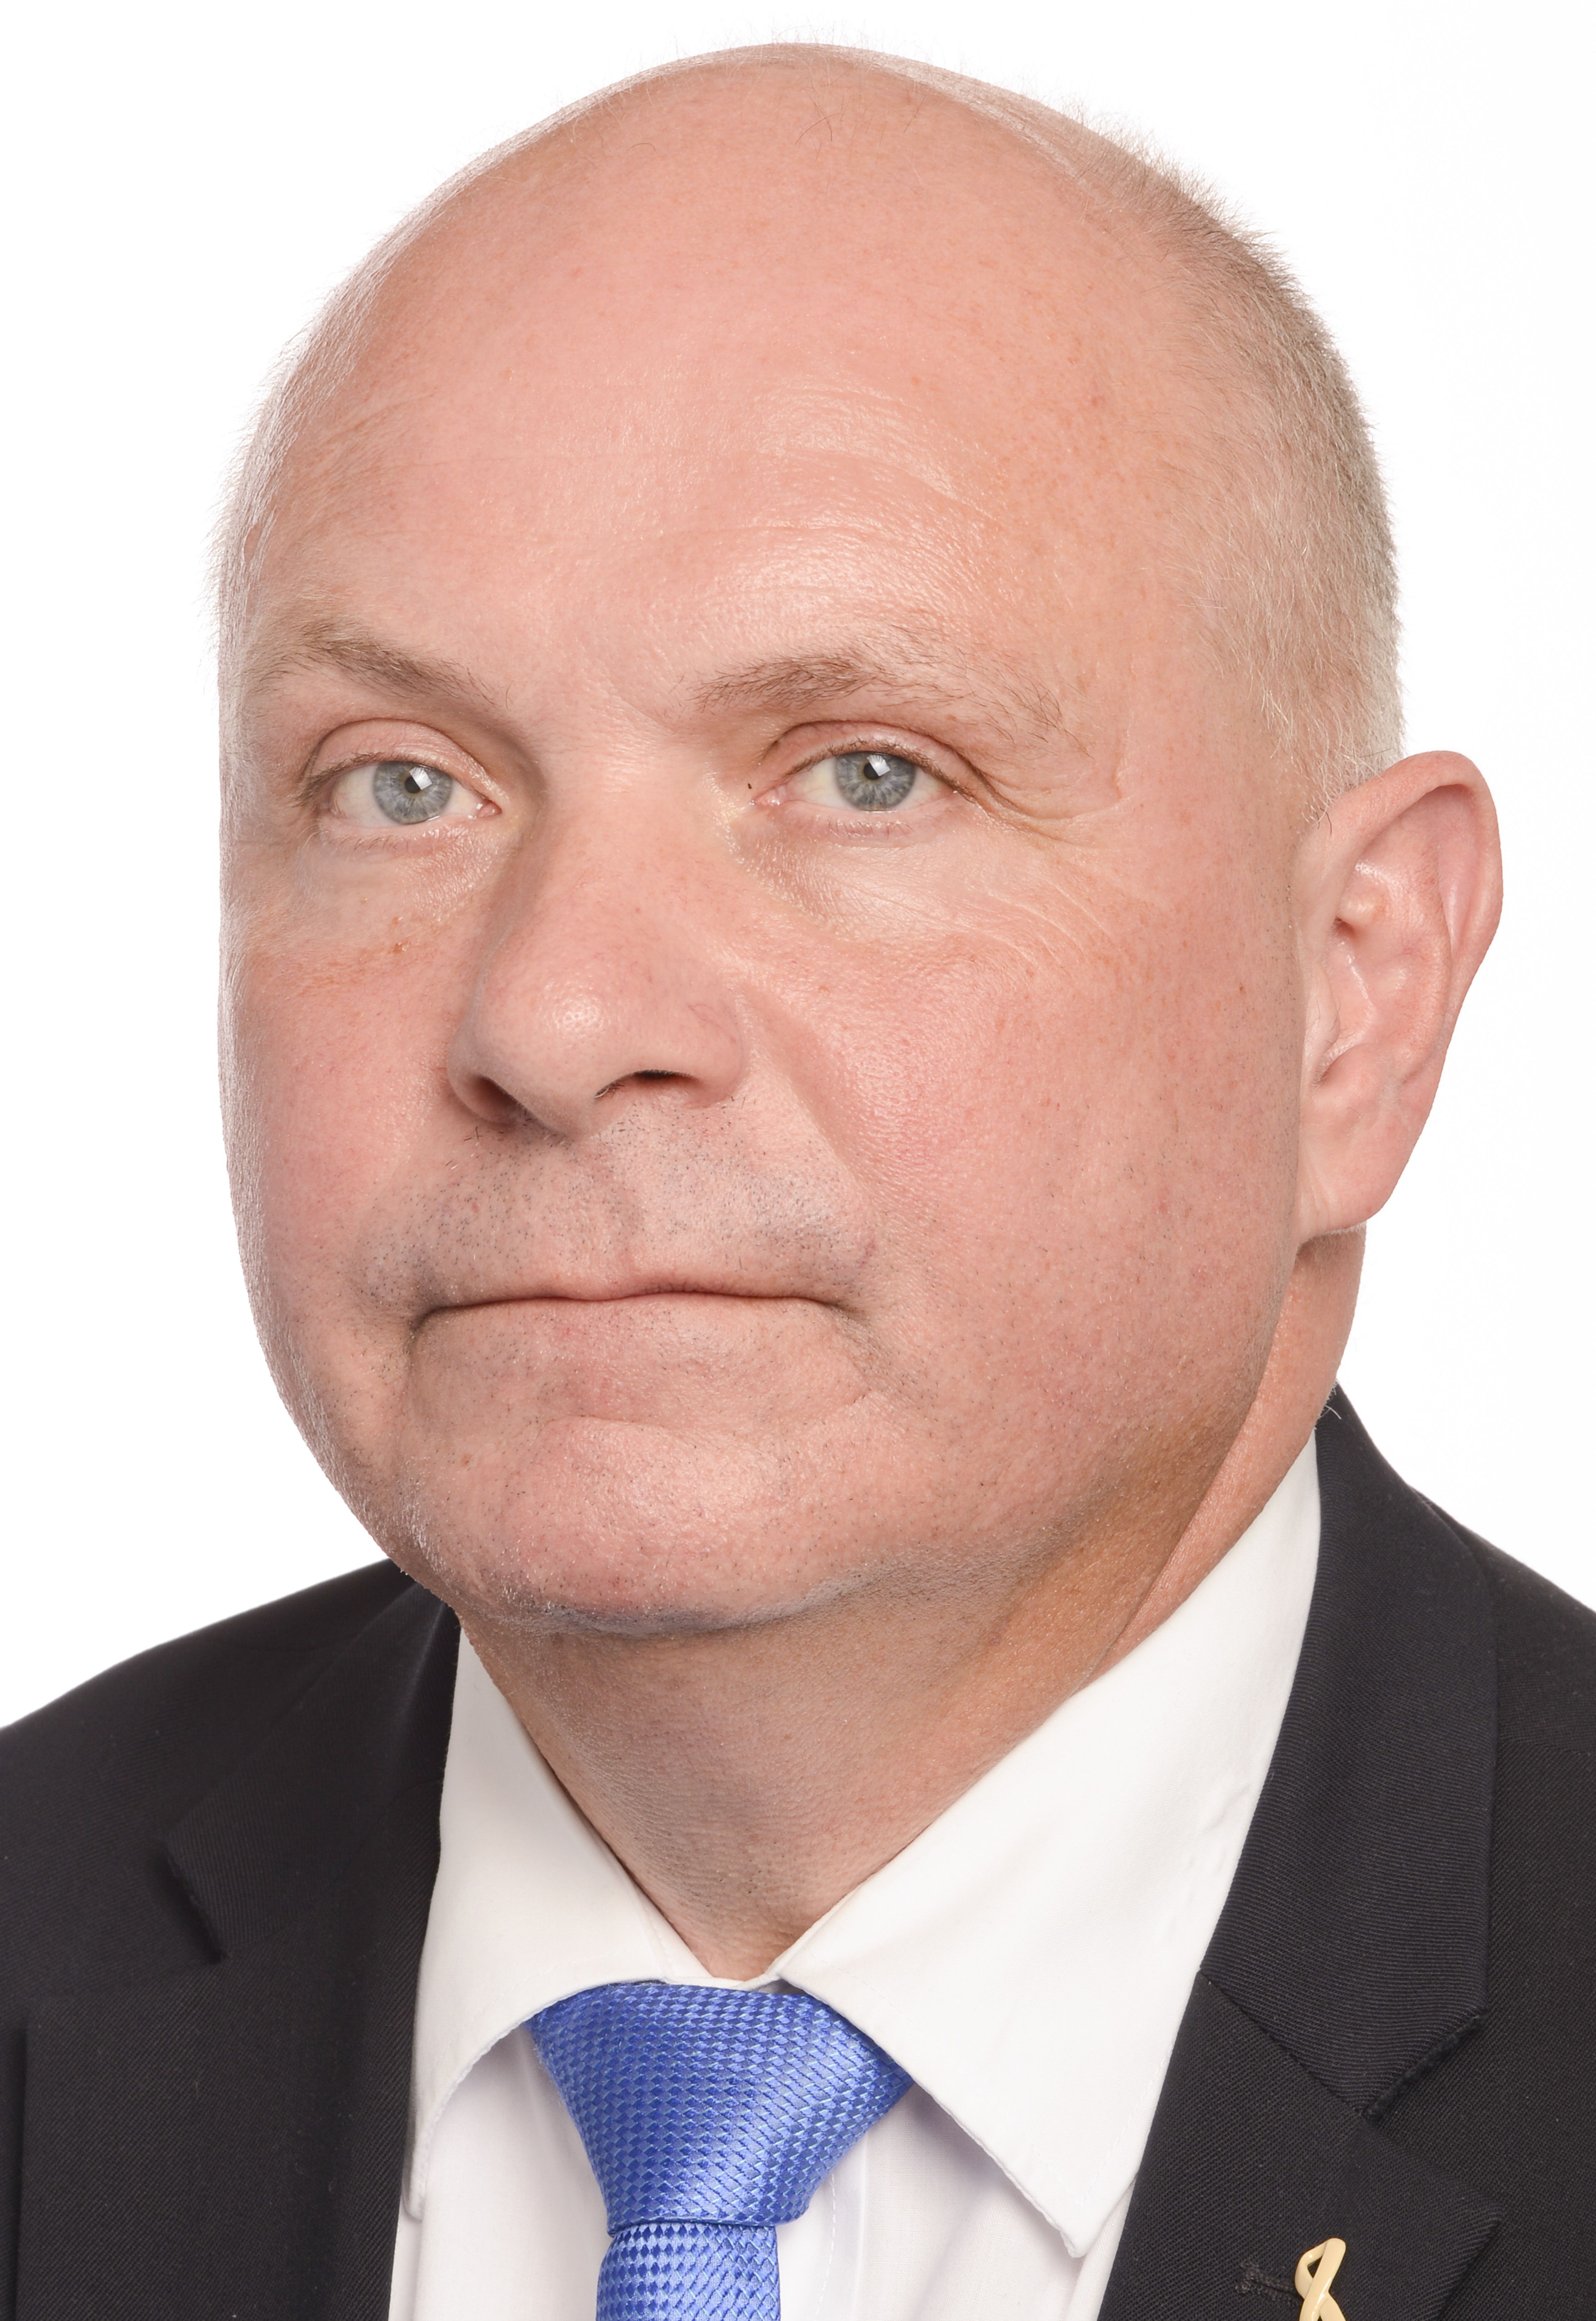 Søren Gade, European Parliament